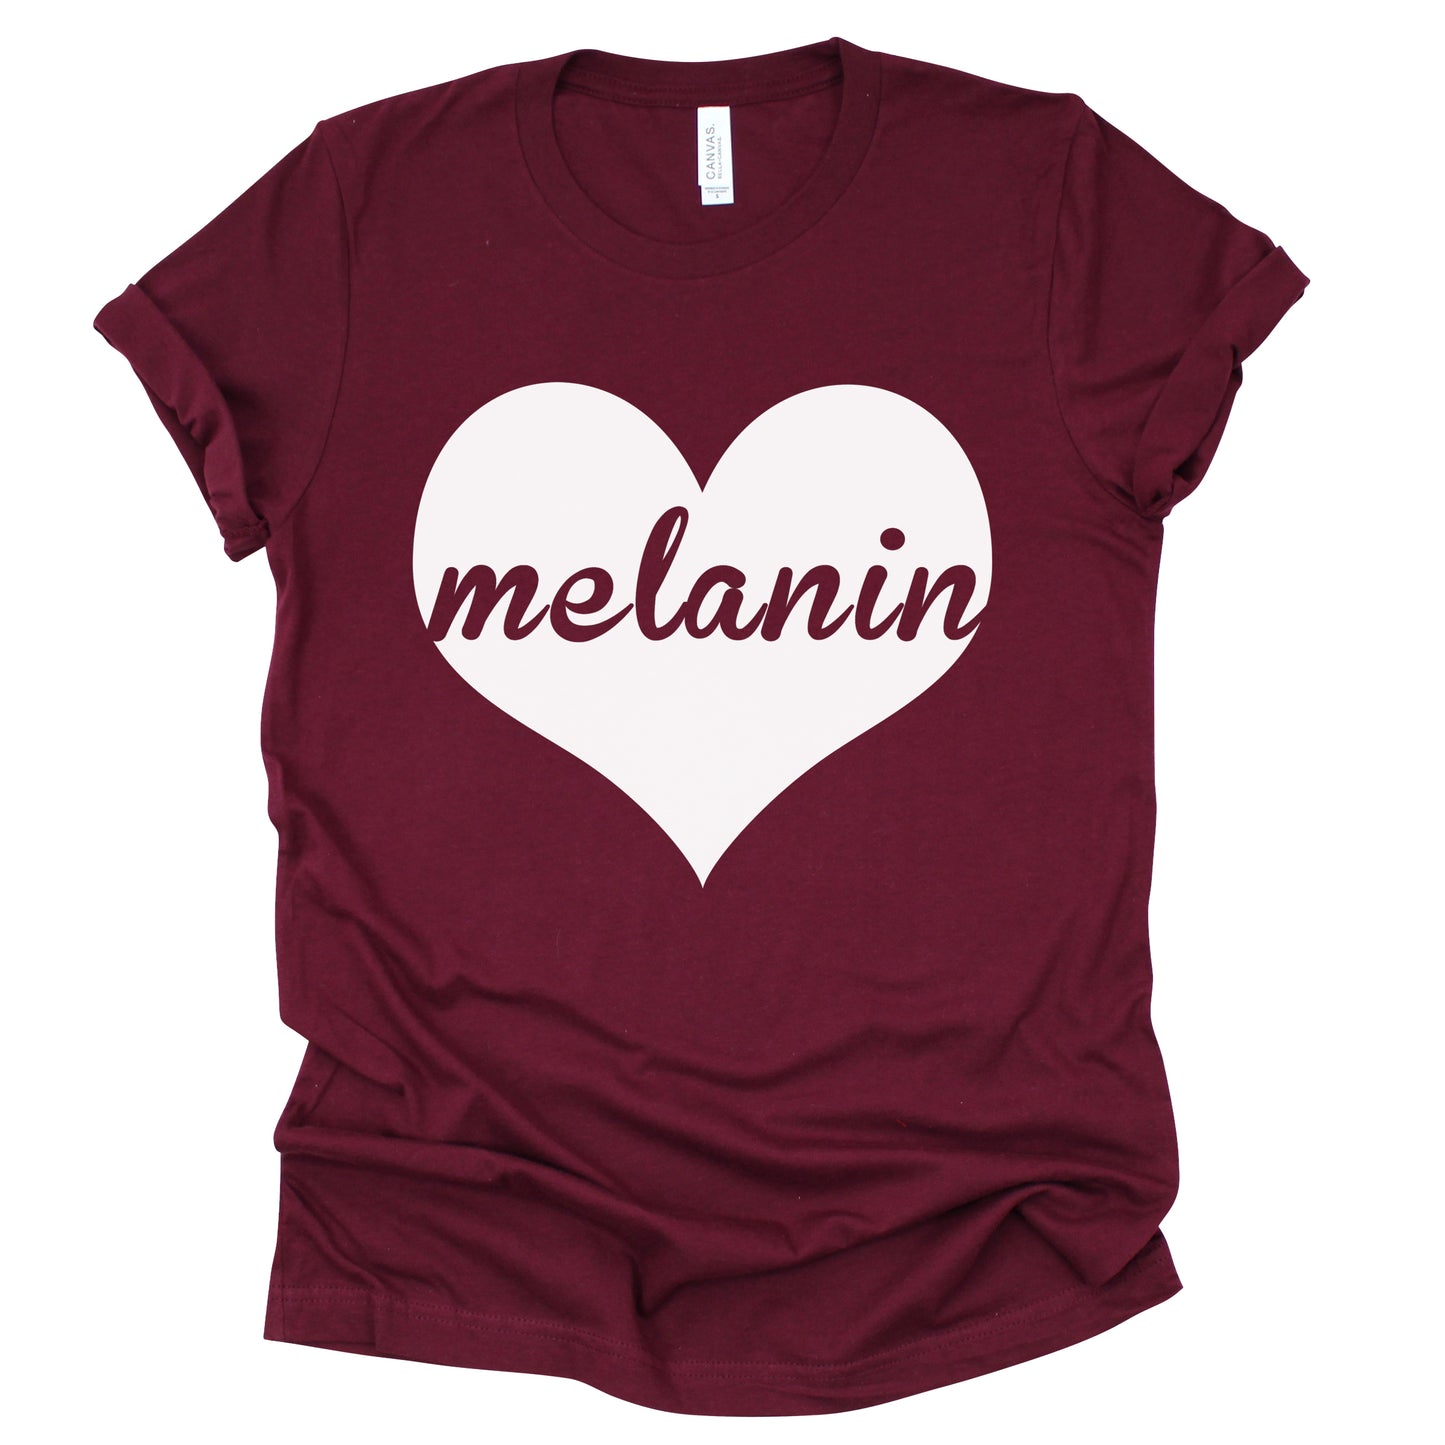 "Melanin Love" Tee